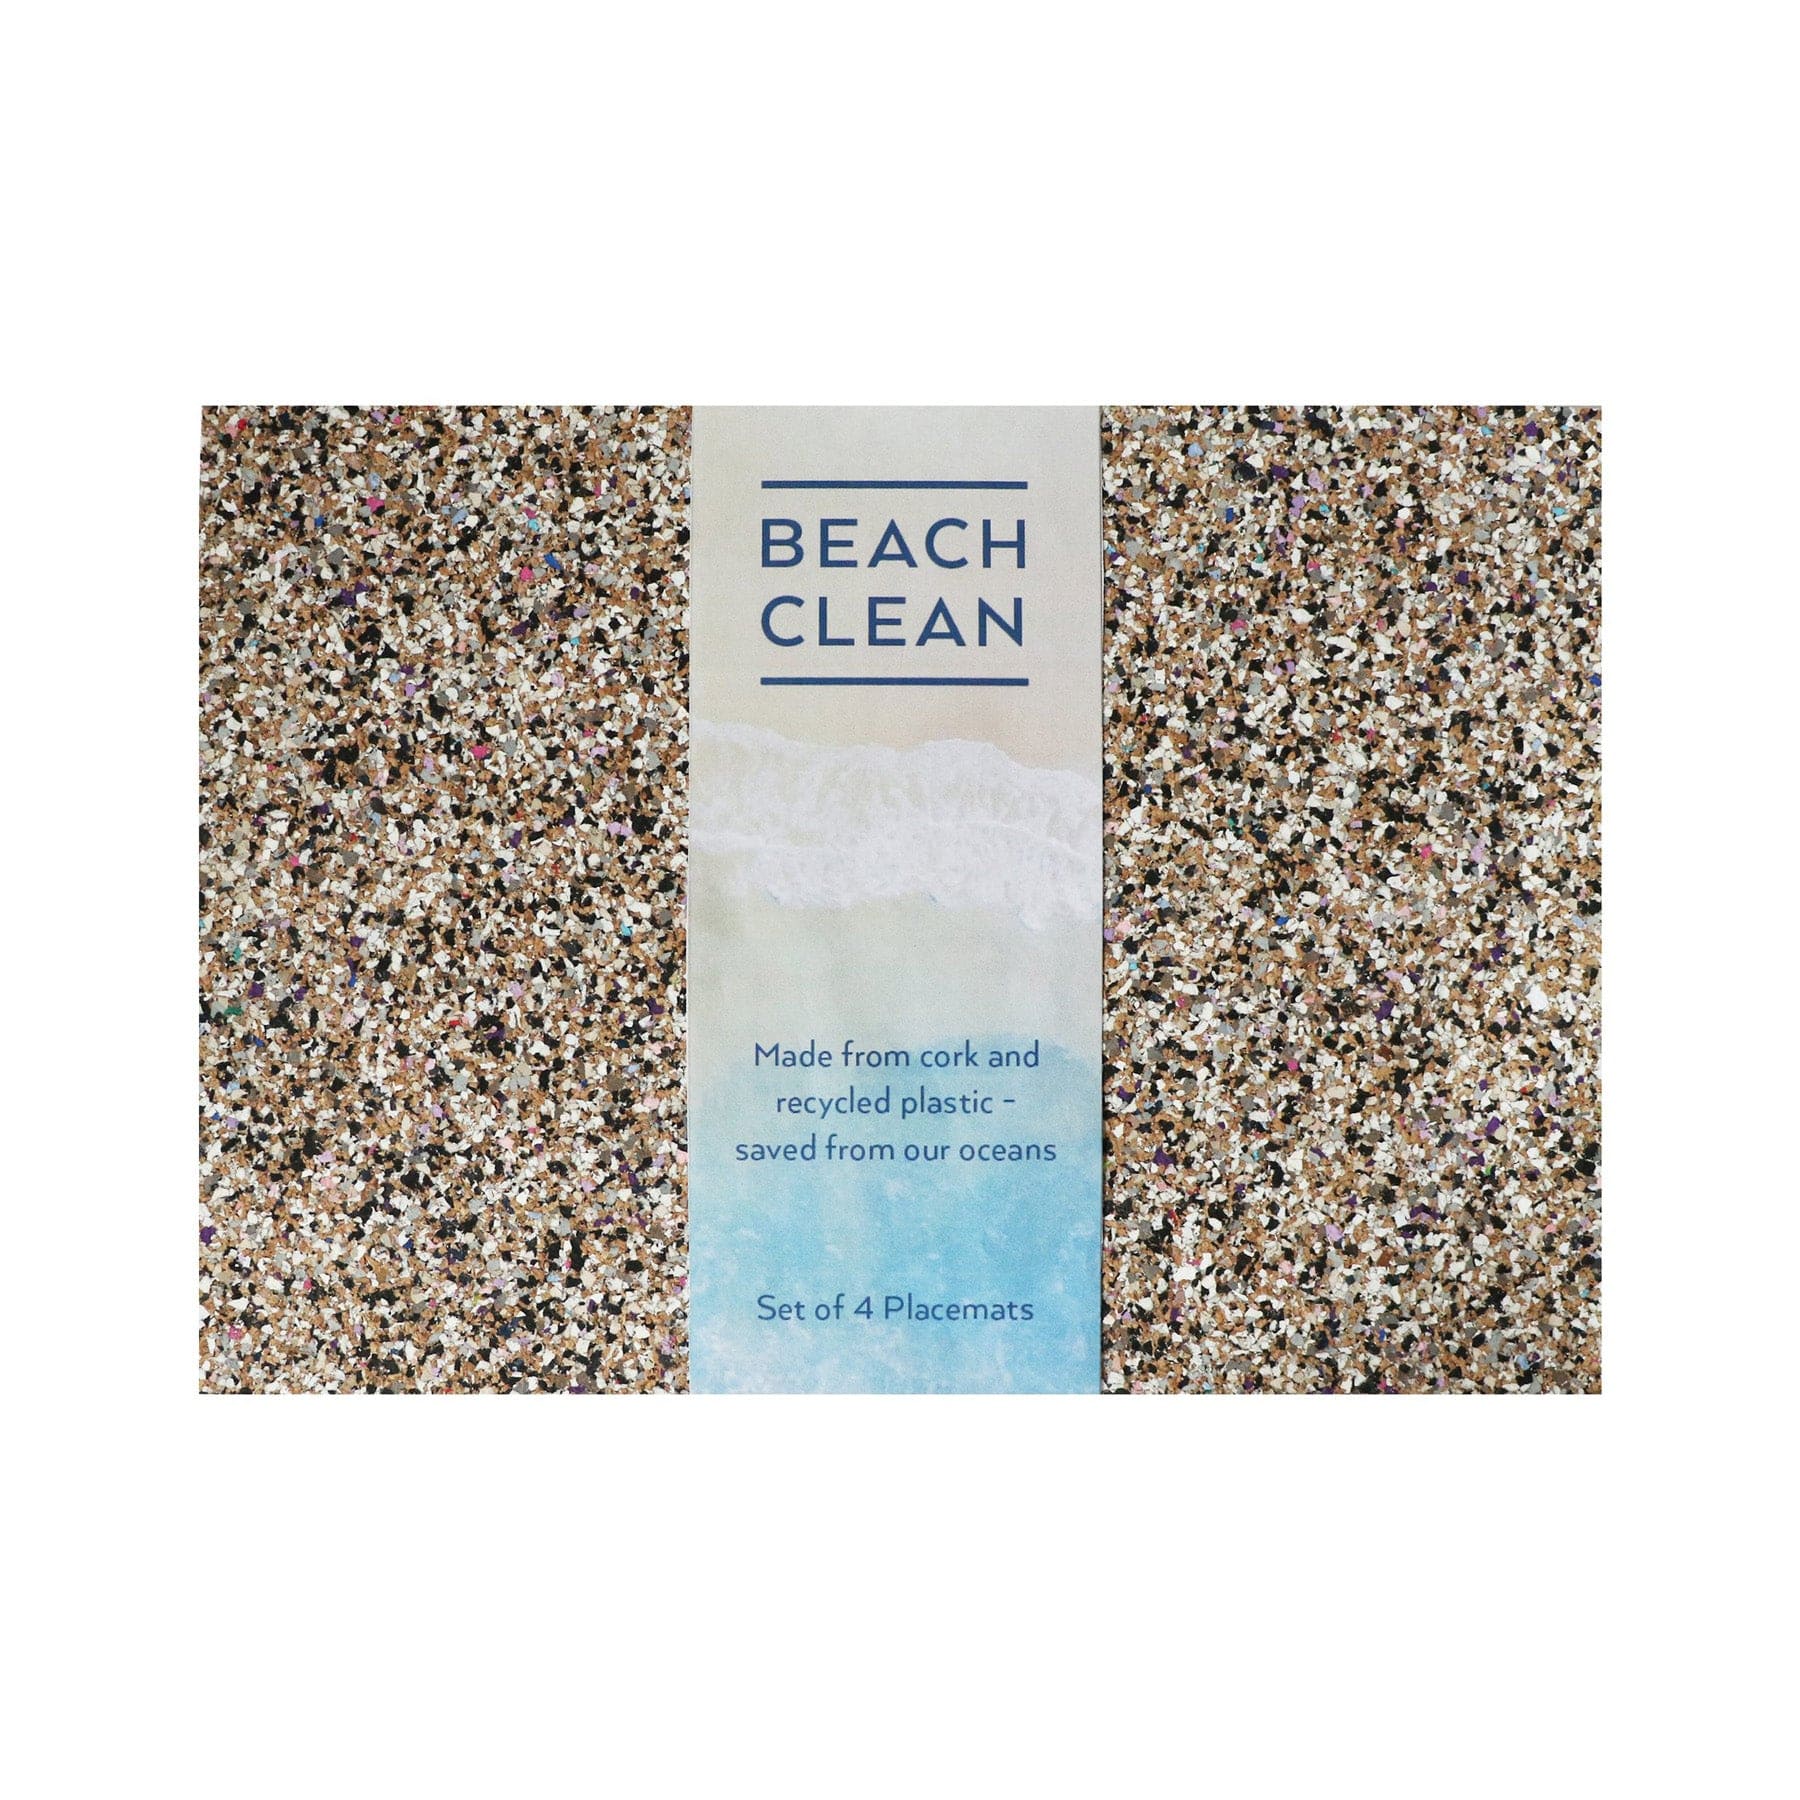 Beach clean rectangle placemat set